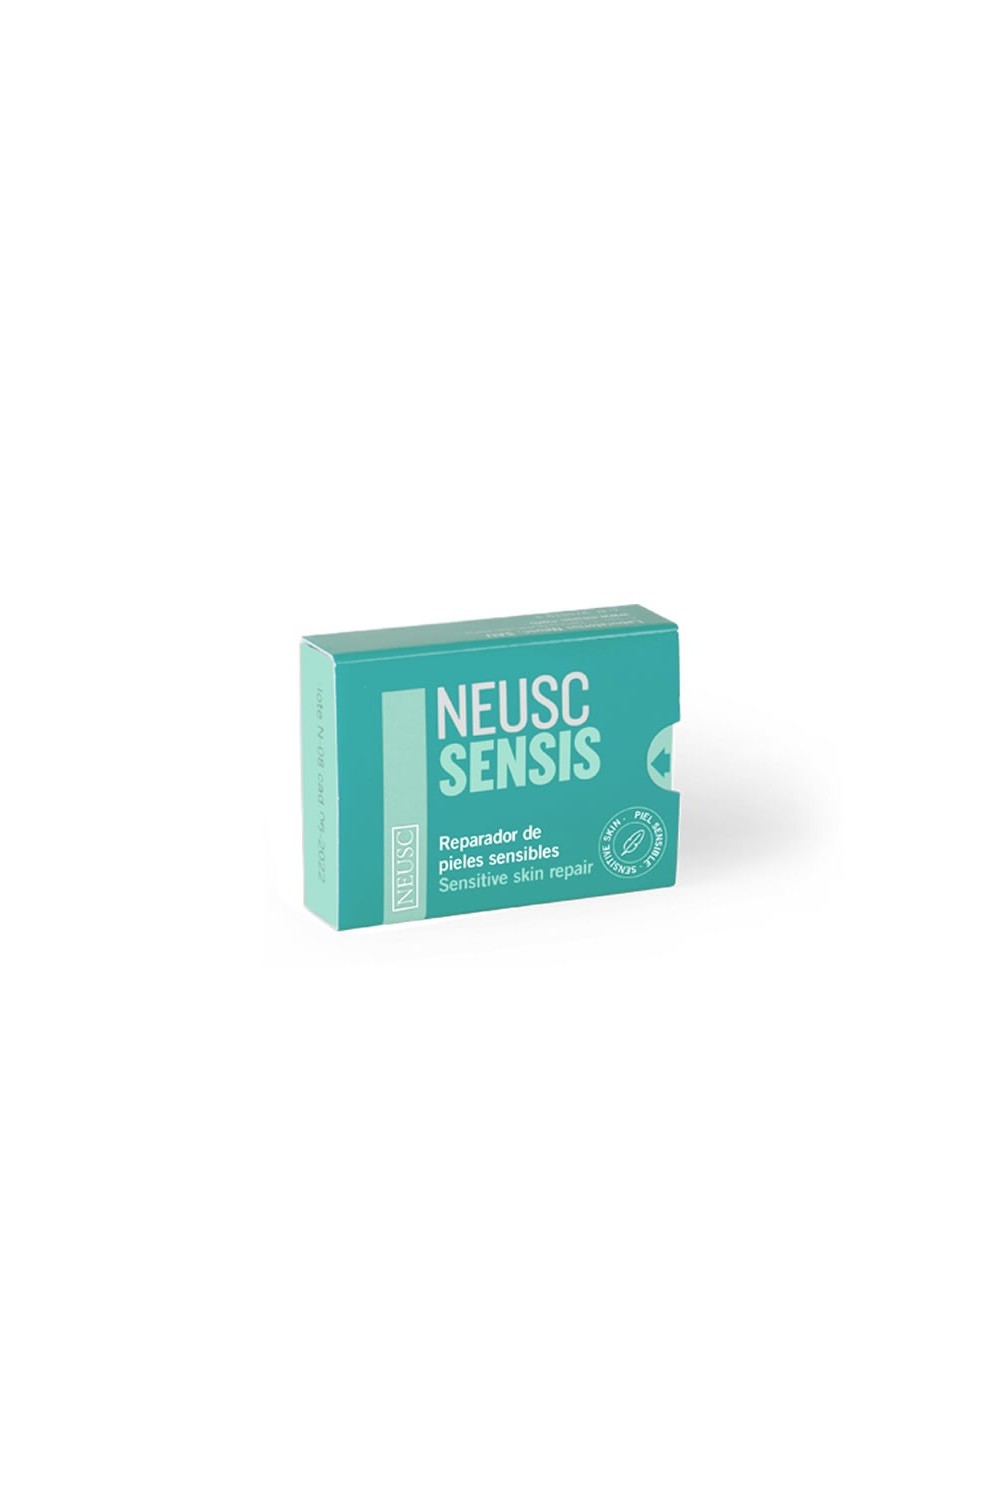 Neusc Sensis Sensitive Skin 24g Tablet